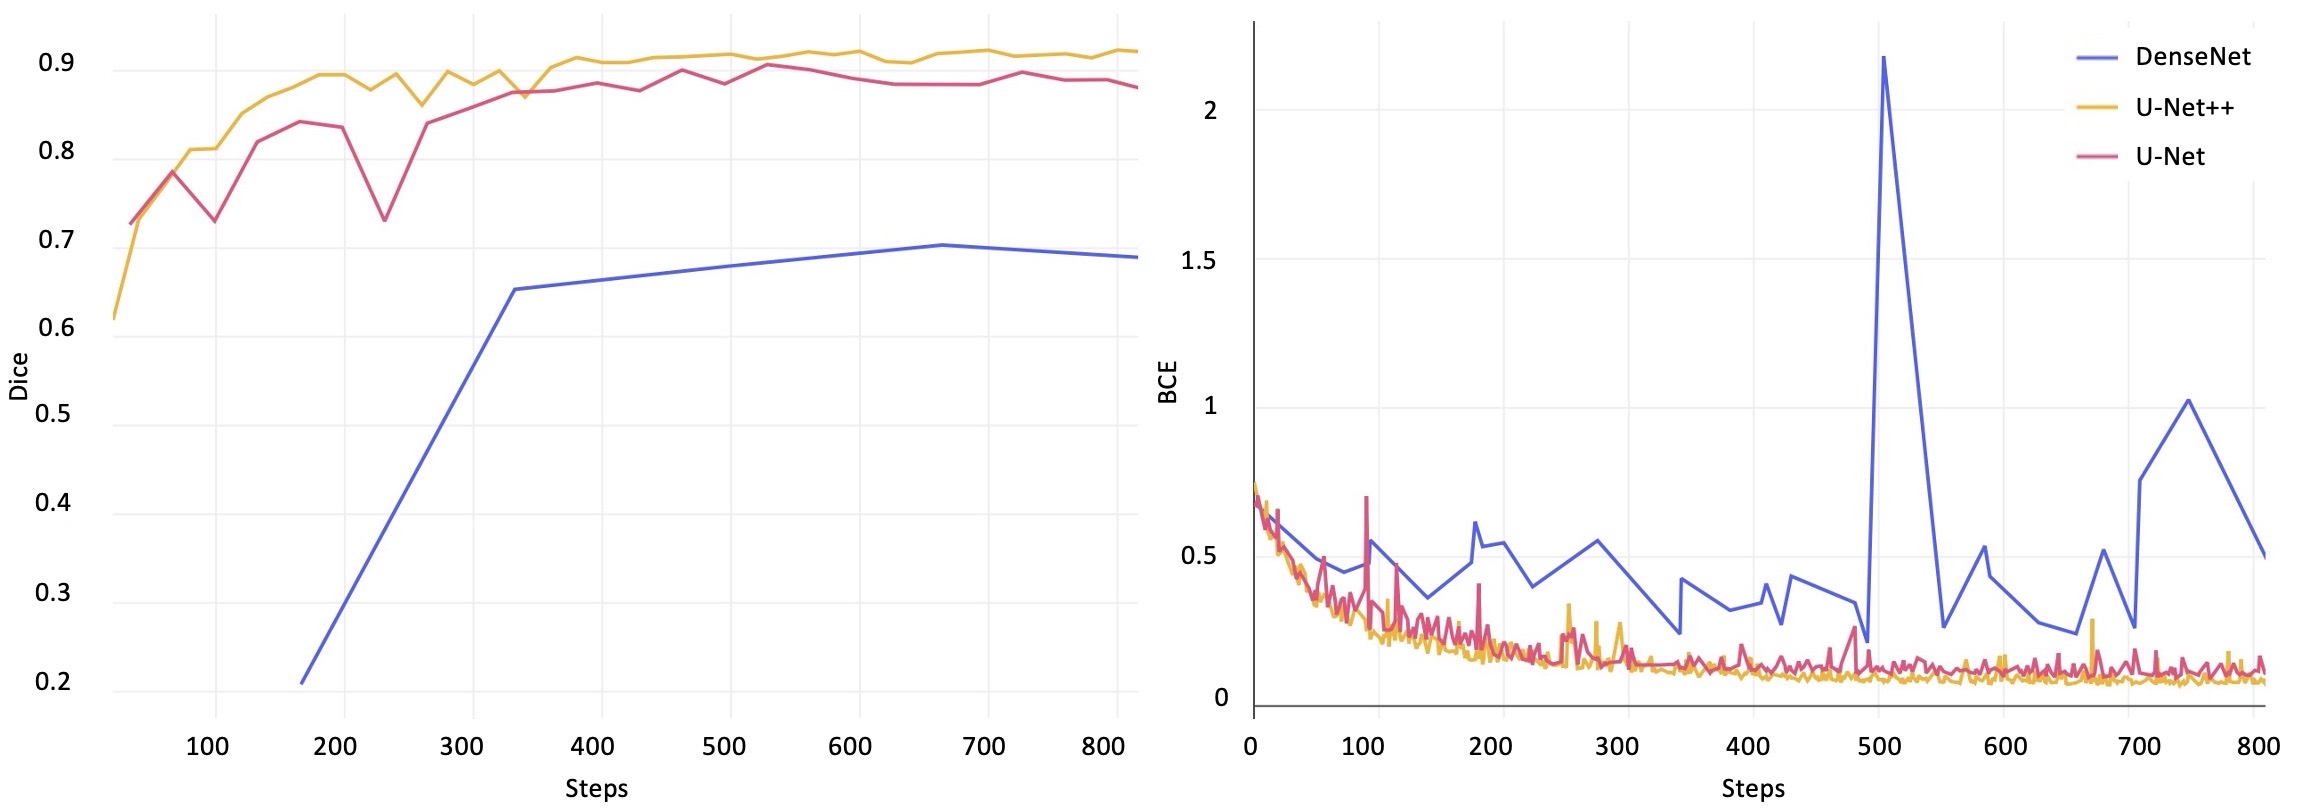 Training curves for U-Net, U-Net++, and DenseNet on validation data.